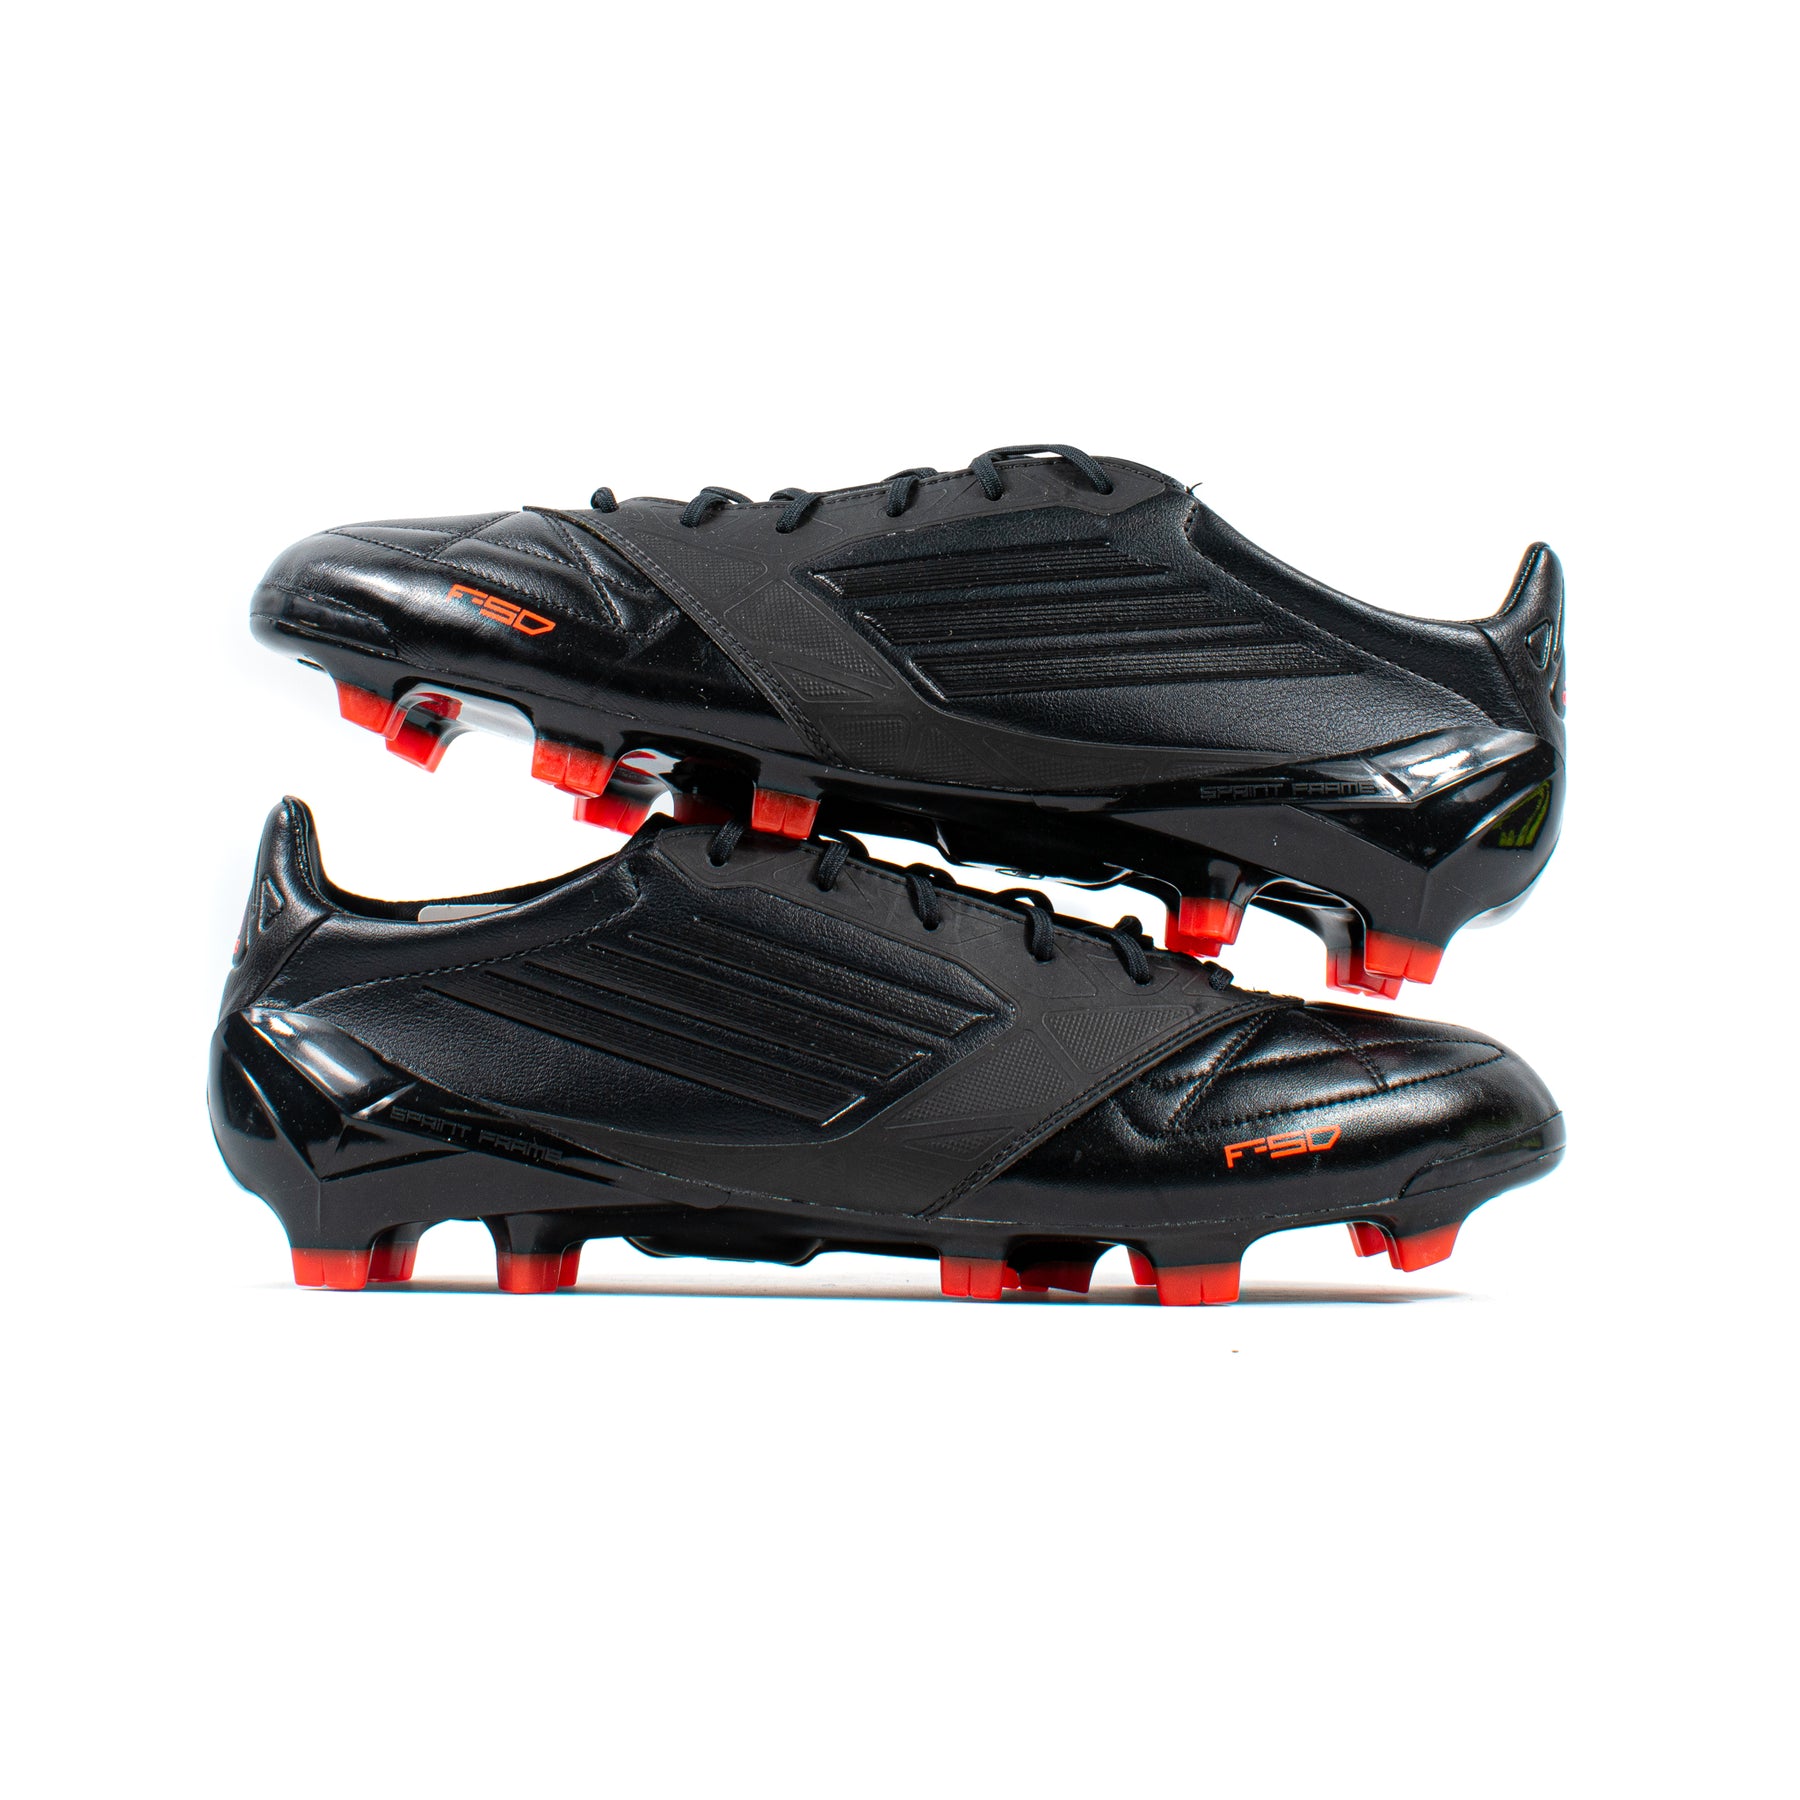 Adidas Adizero 2012 Blackout Leather FG – Soccer